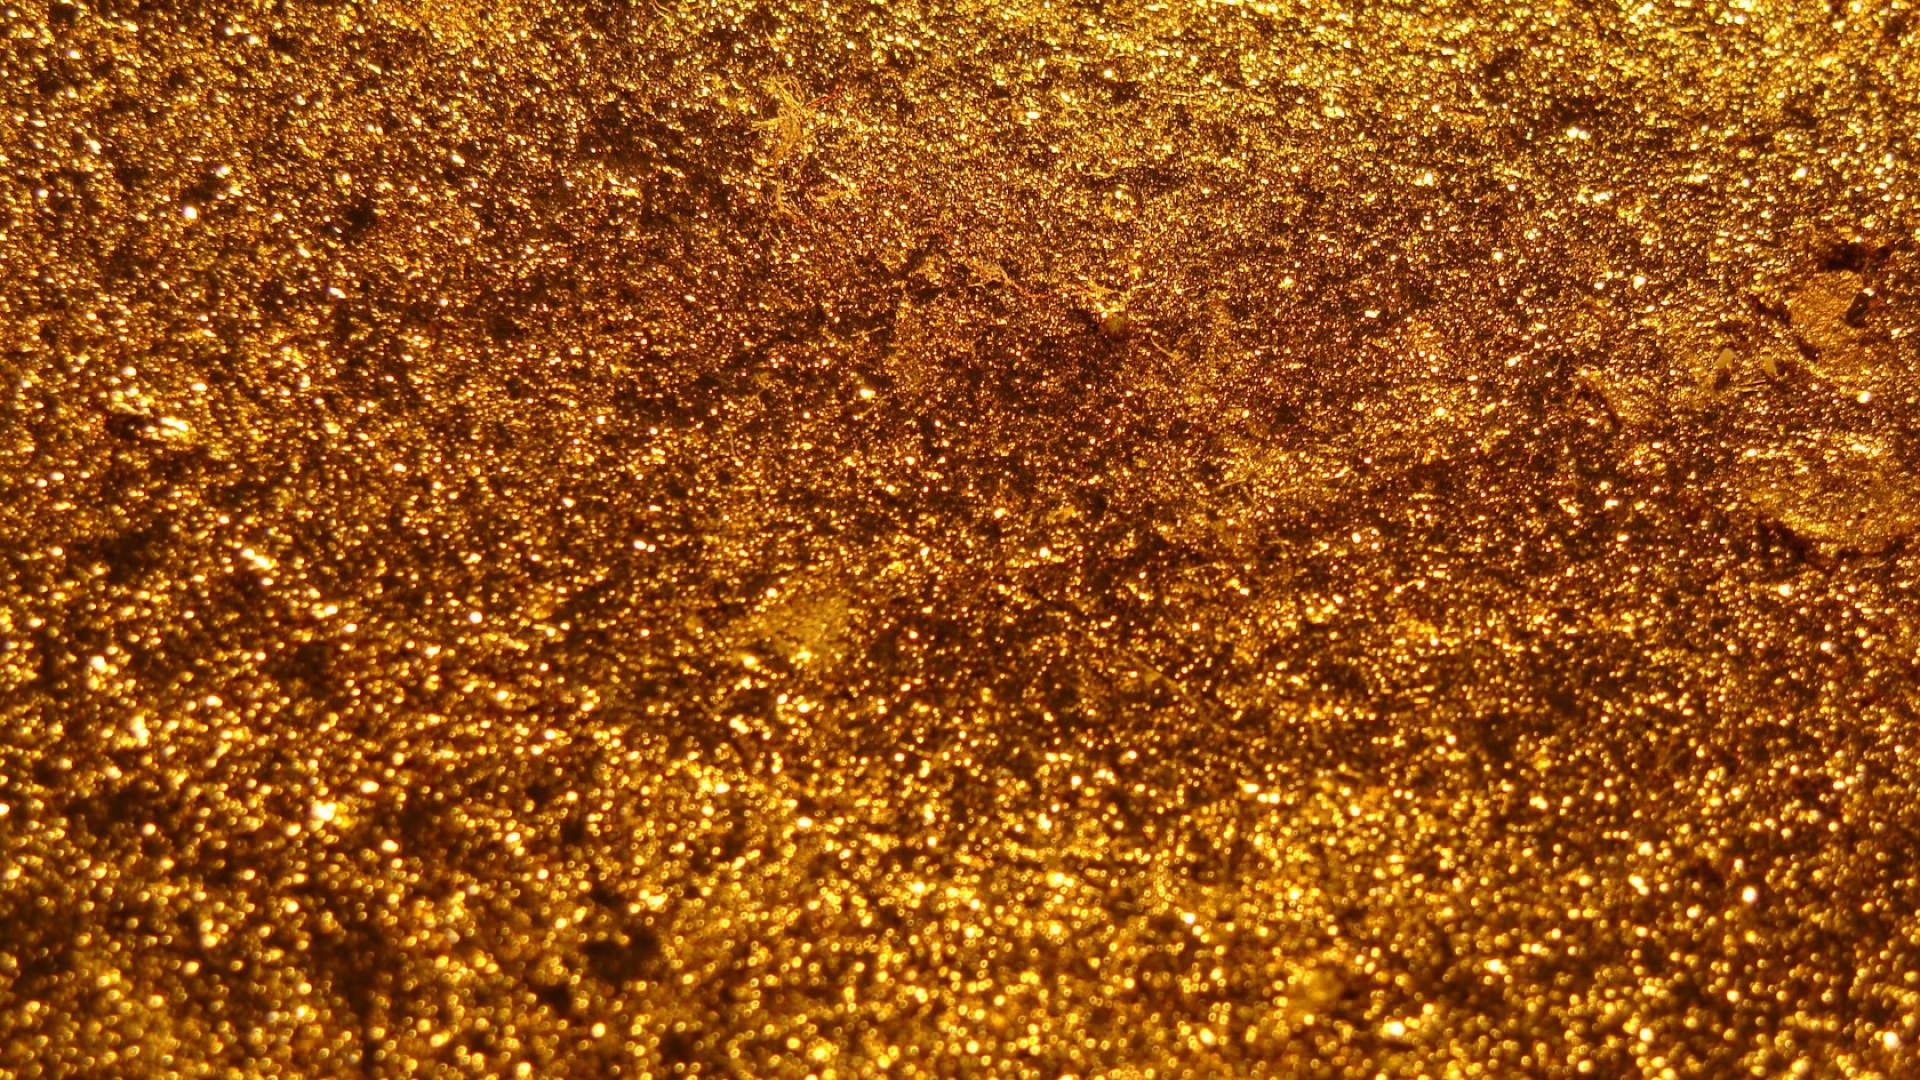 sand glitter gold wallpaper, golden background picture download